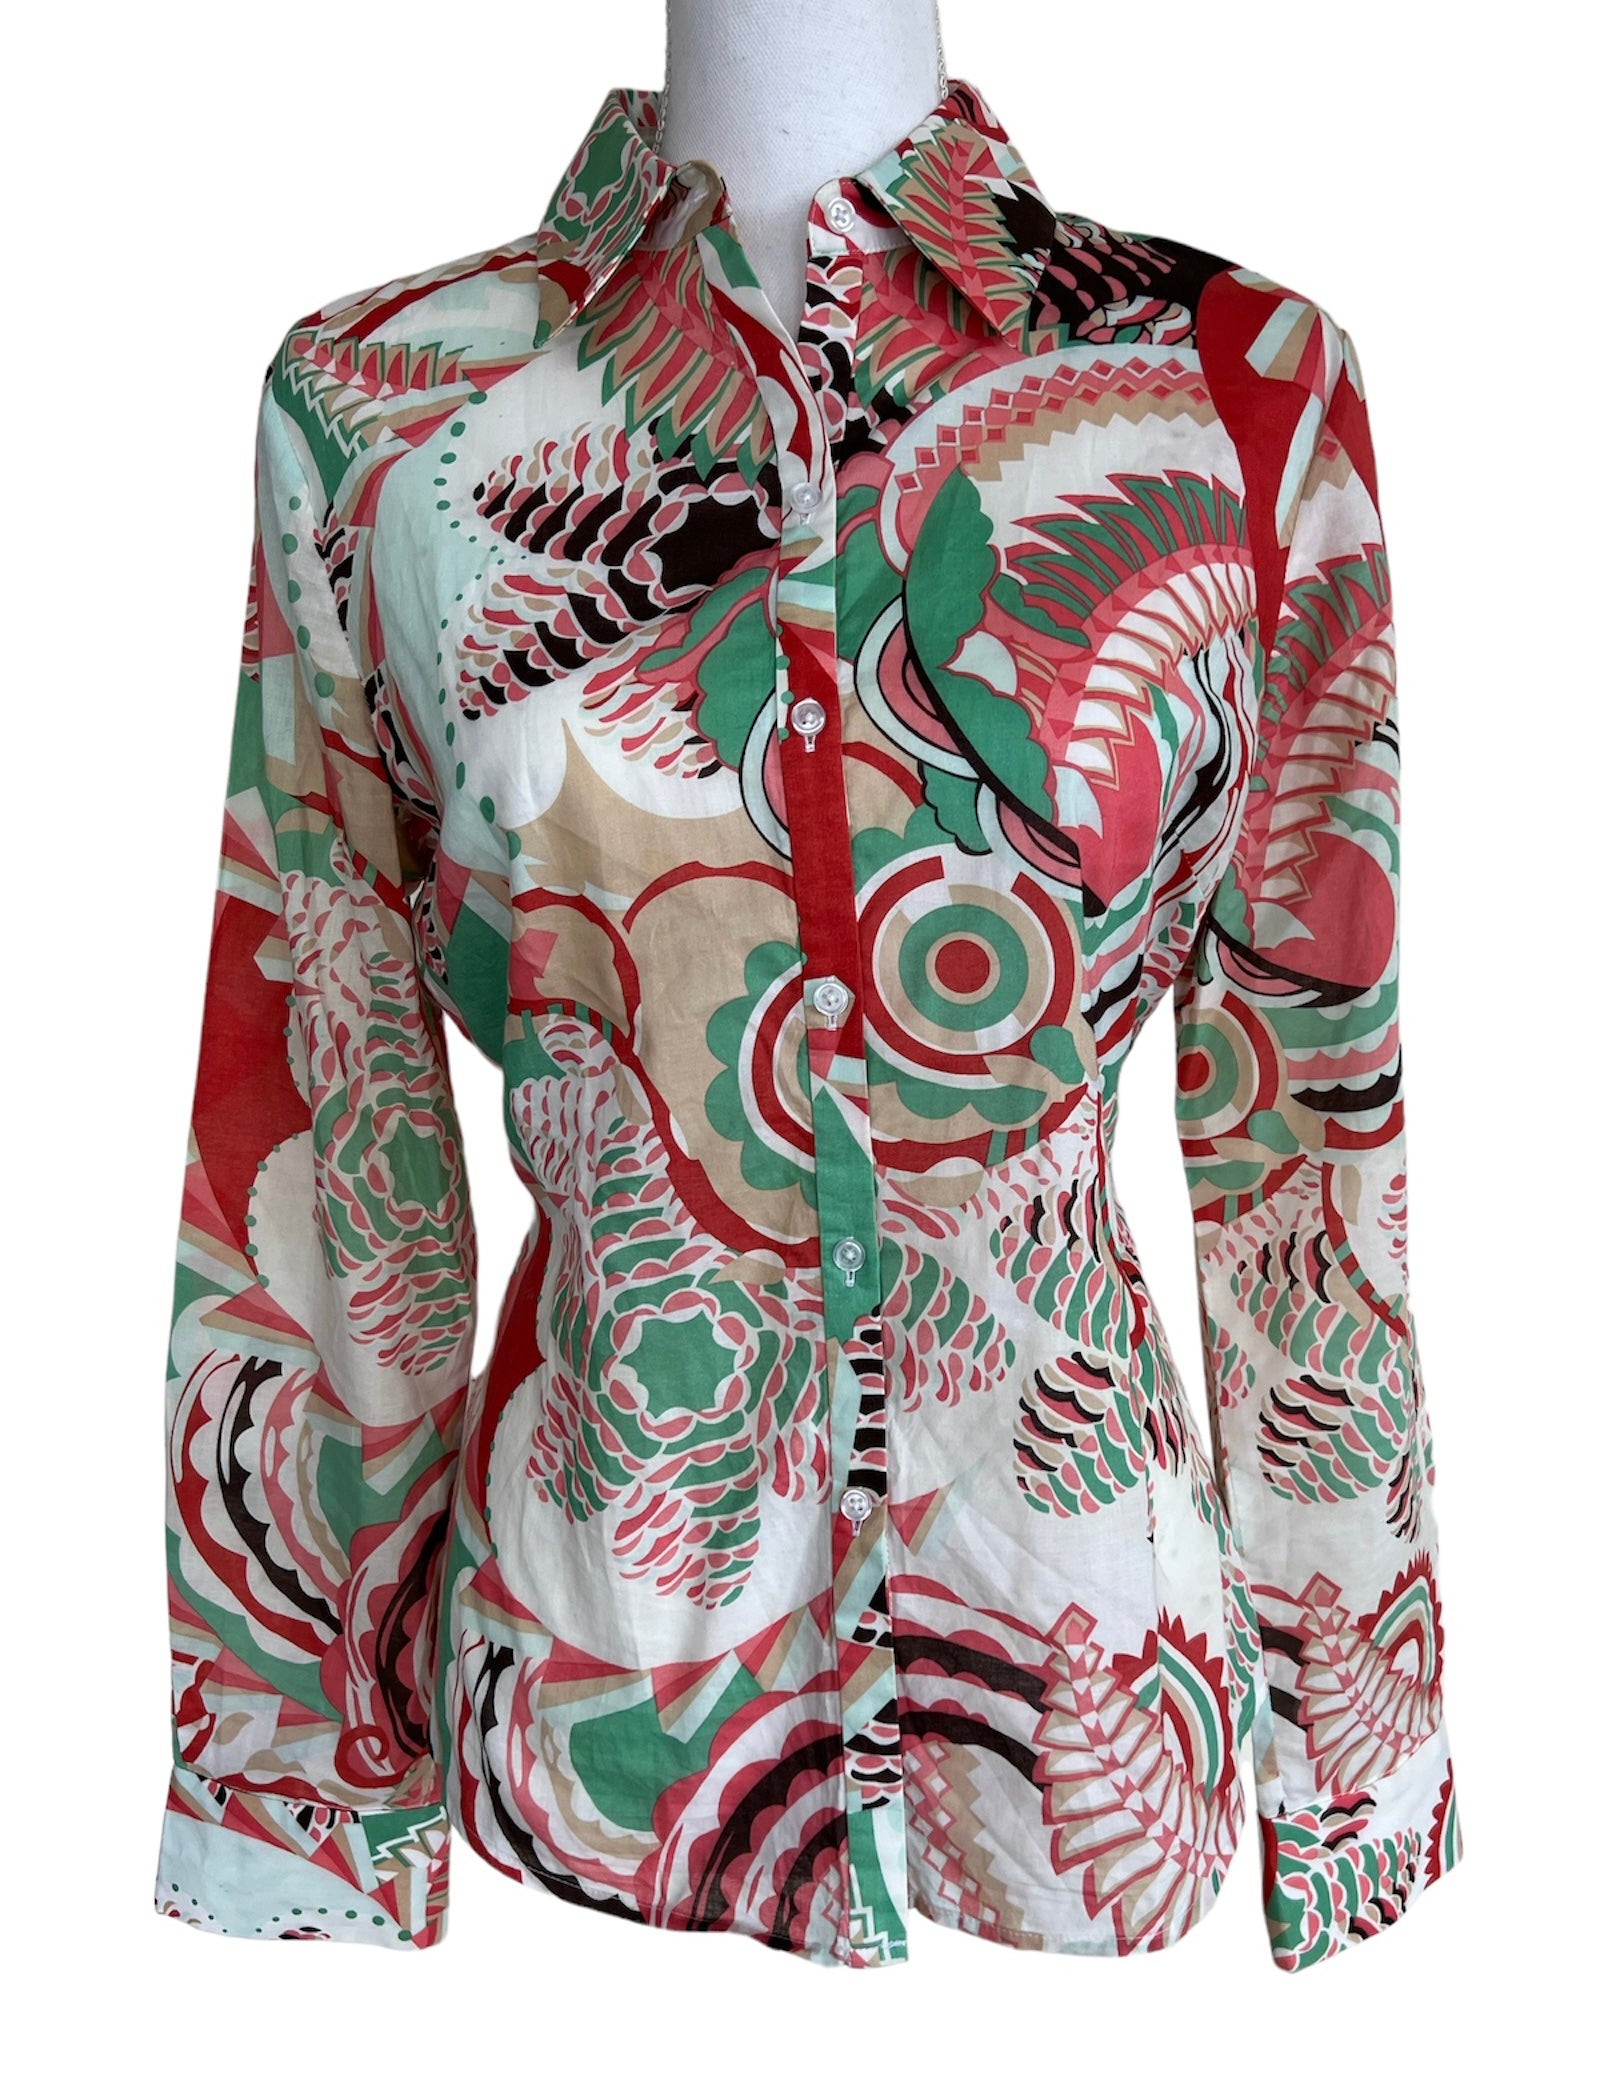 Tahari Coral Print "Delia" Shirt, S